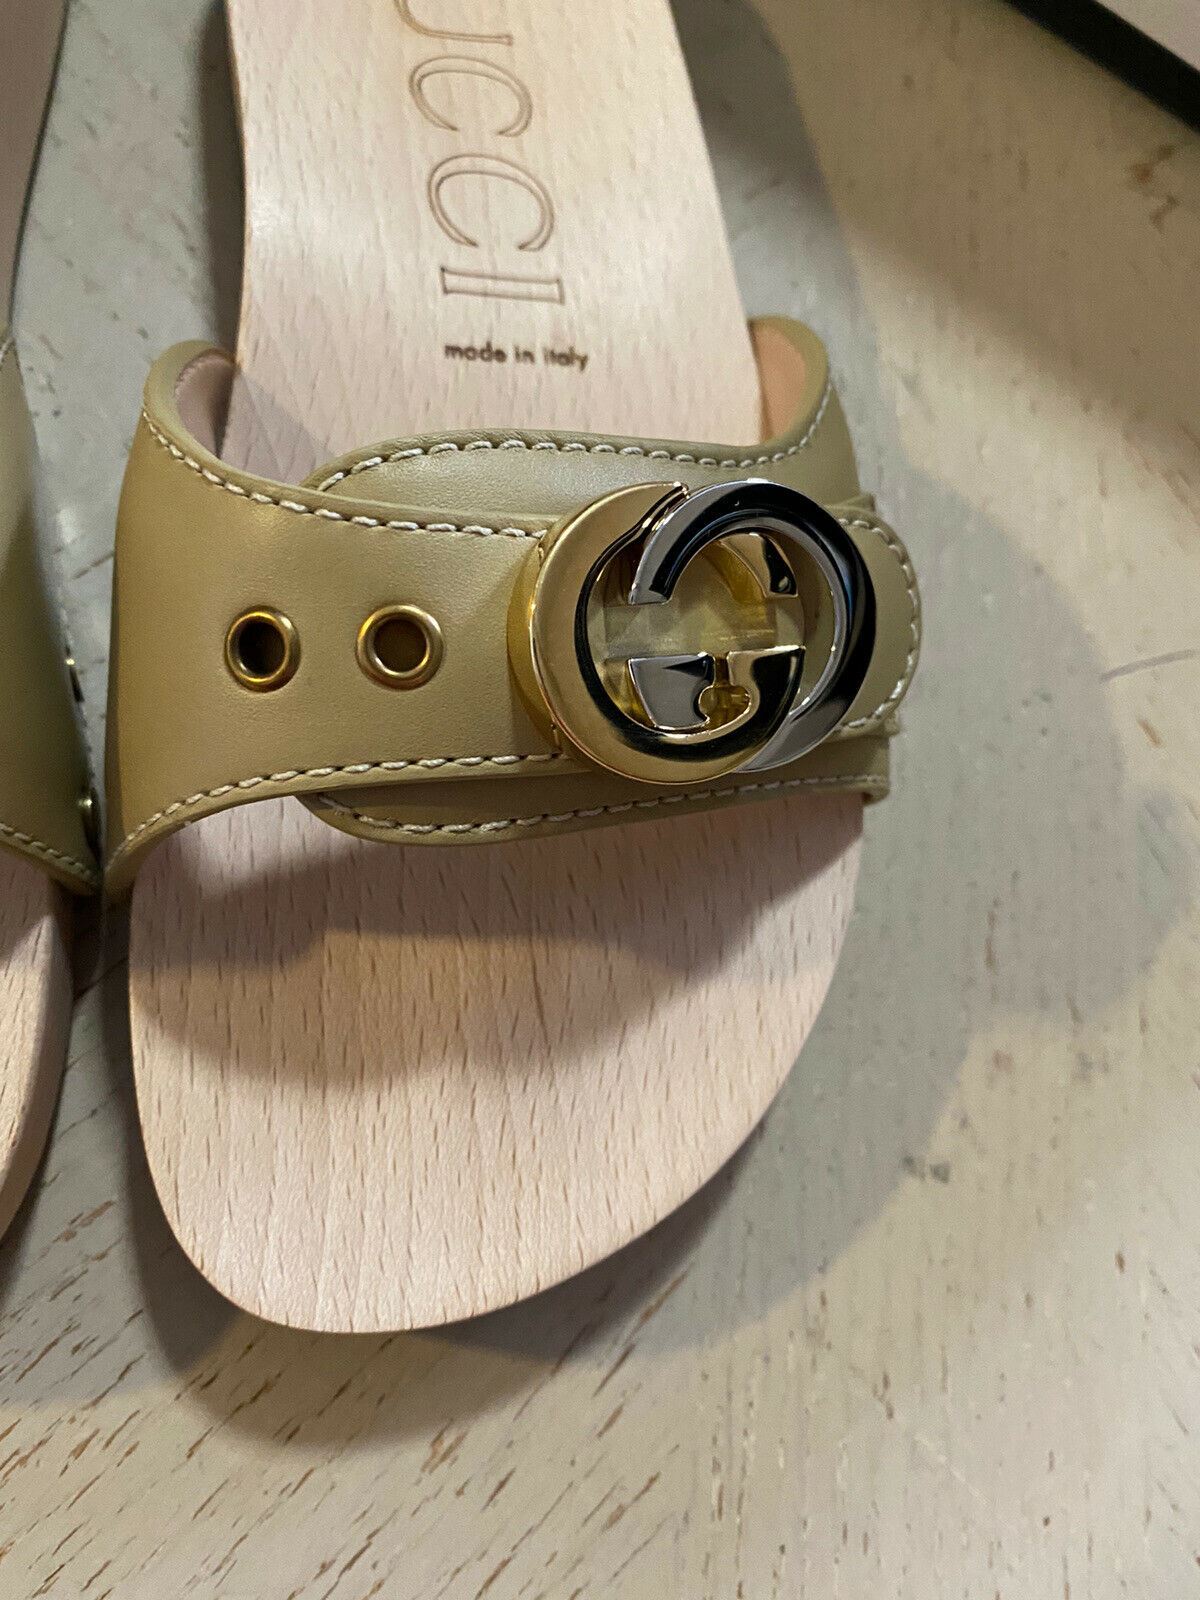 NIB  Gucci Women Leather/Wood Sandal Shoes Beige 5 US ( 35 Eu ) Italy